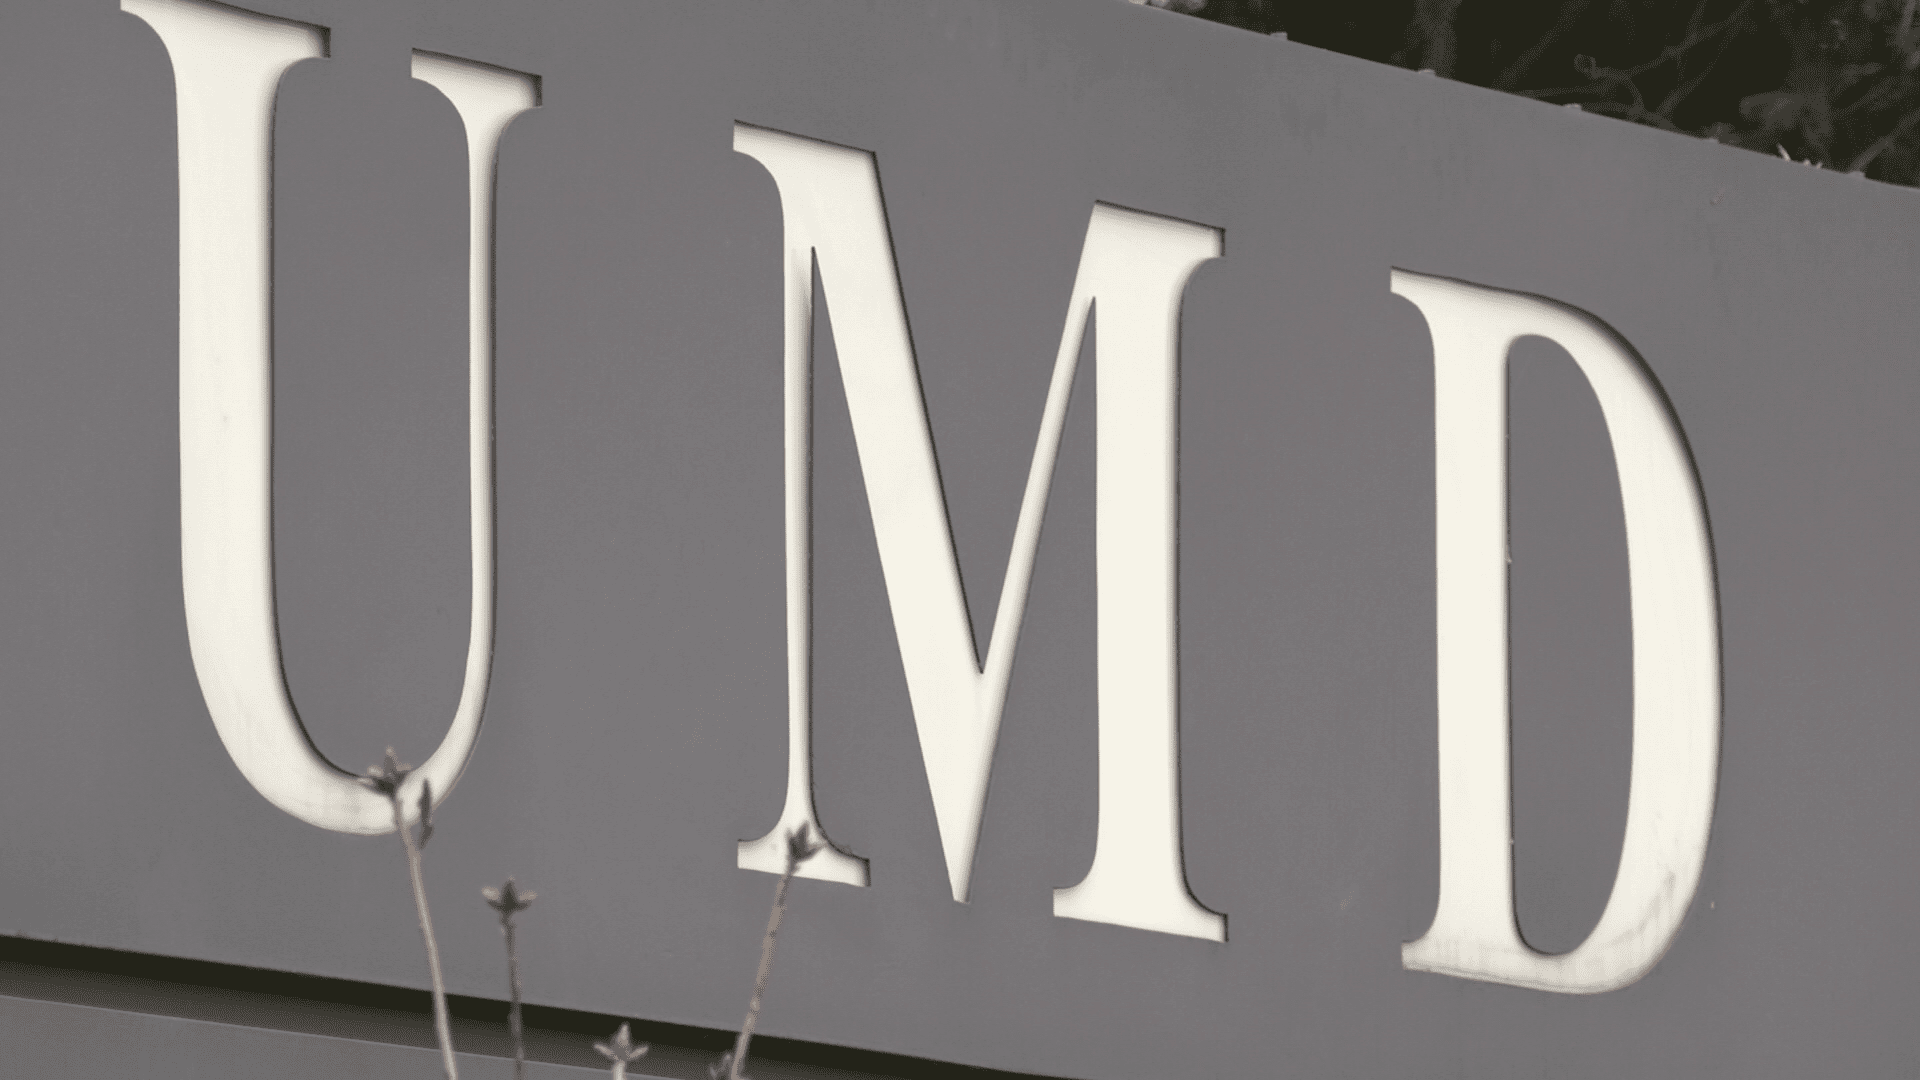 UMD sign.